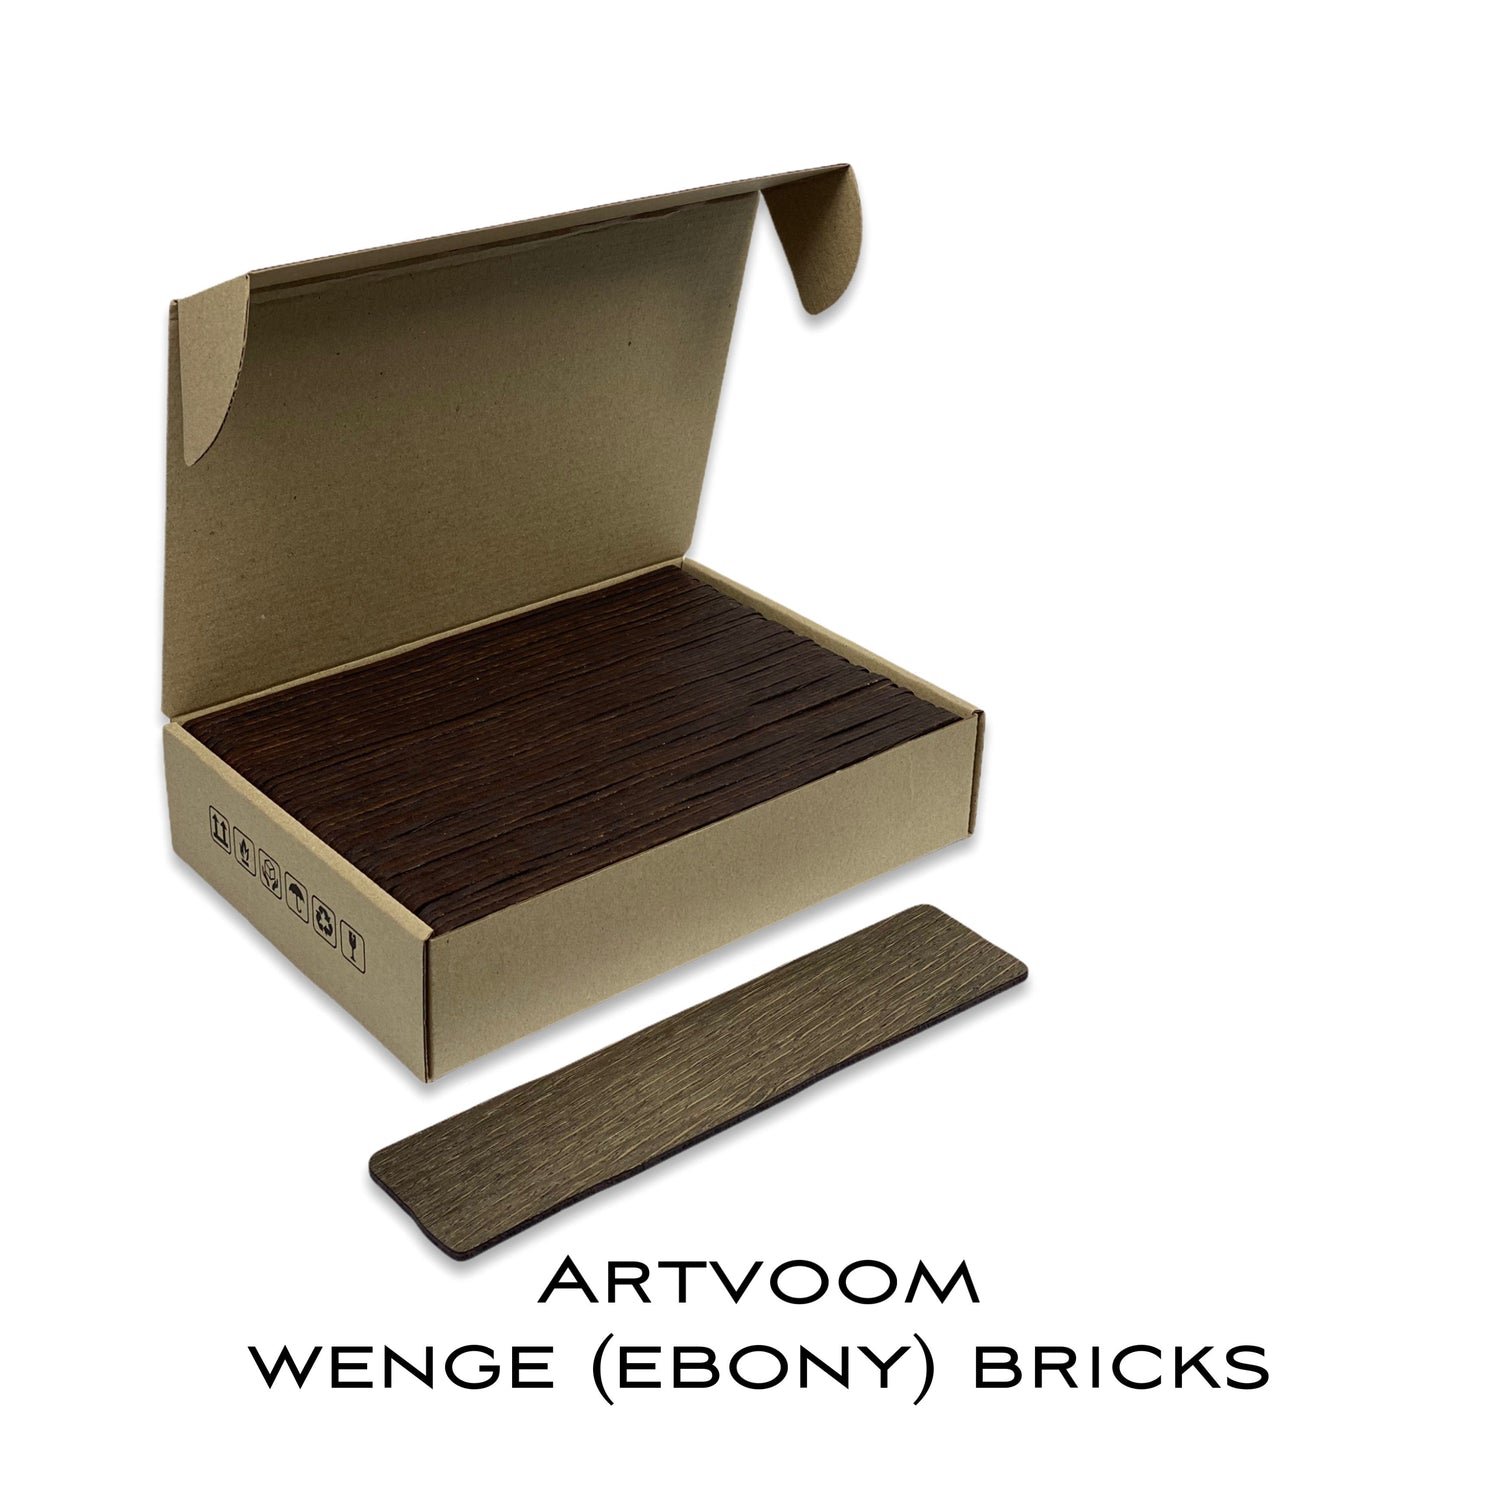 Real Wooden Ebony (Wenge) Faux Bricks for Wall Panels, 42 pcs in box. Artvoom Wall Decor - Artvoom